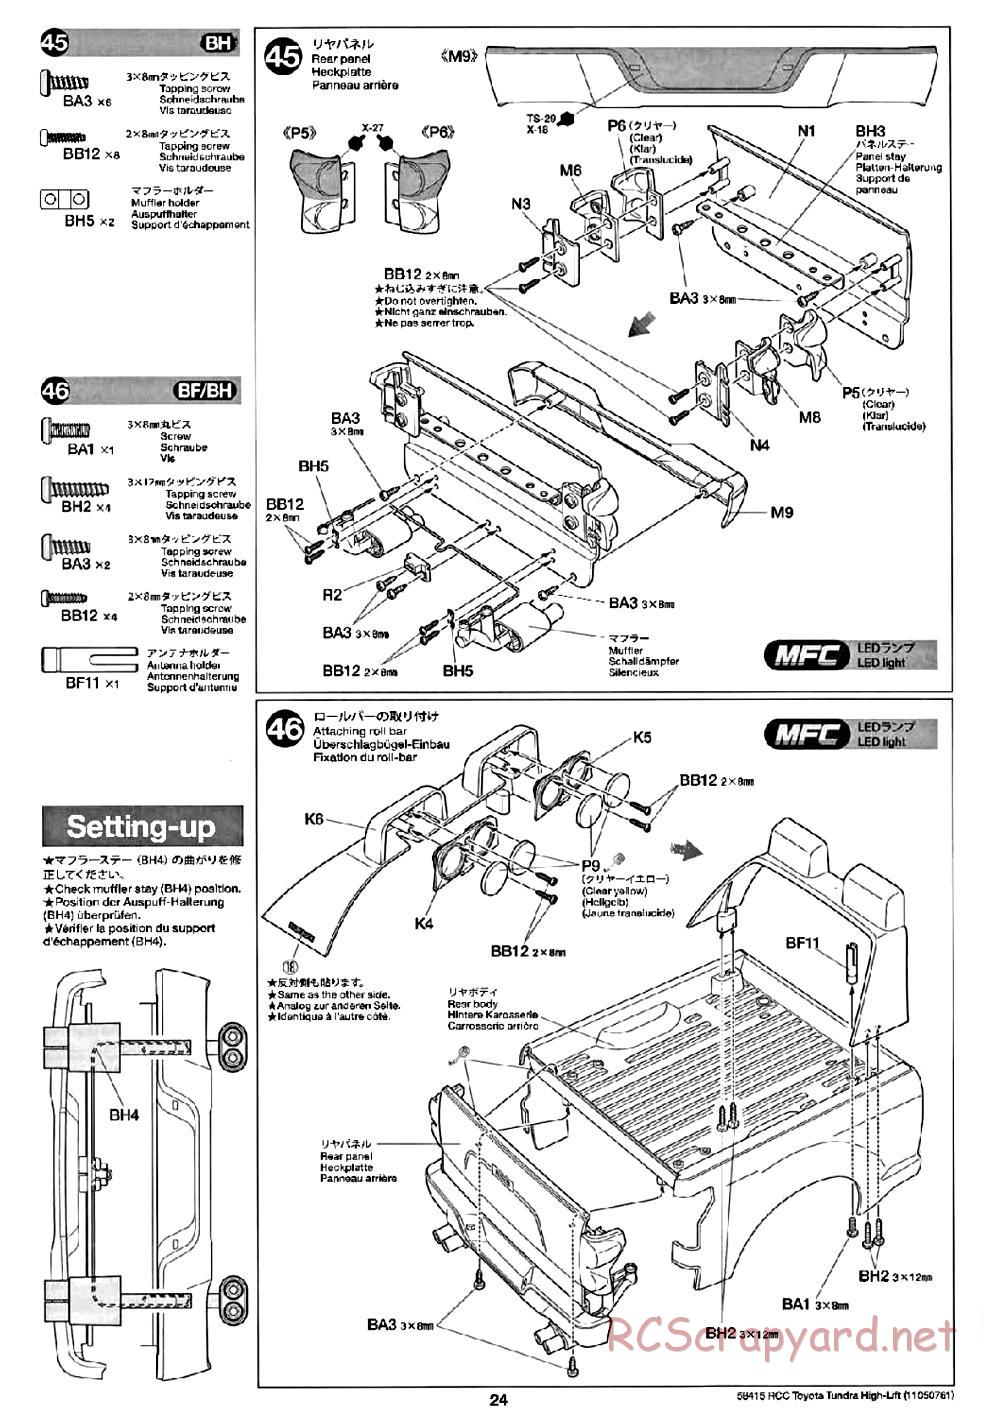 Tamiya - Toyota Tundra High-Lift Chassis - Manual - Page 24